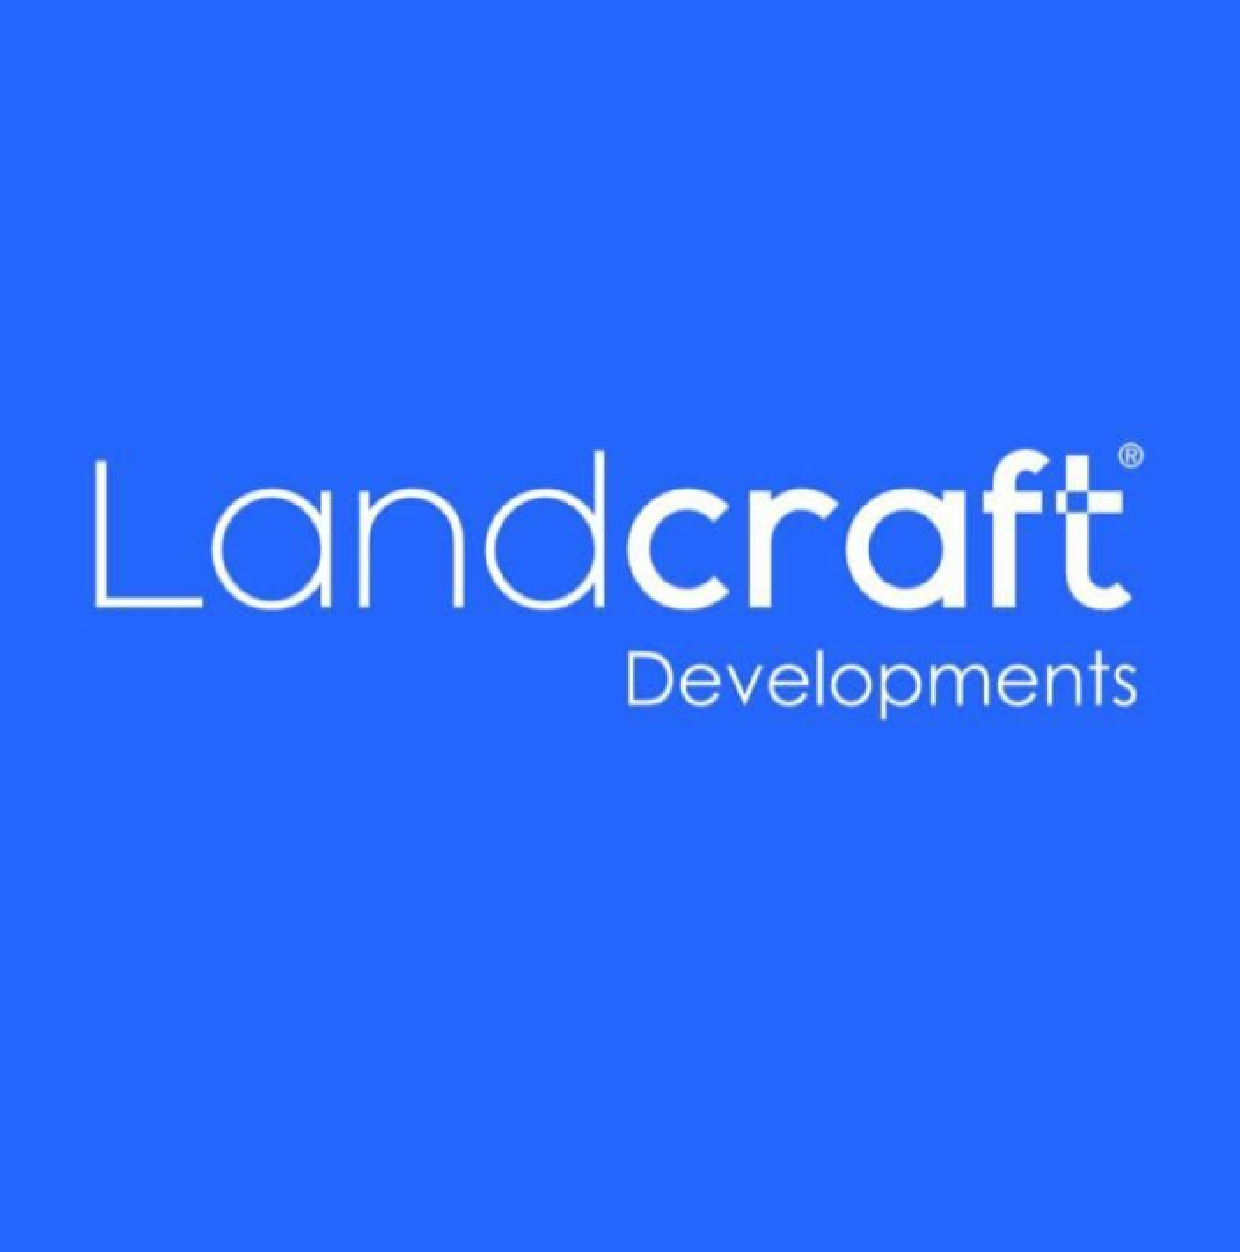 LandCraft Development